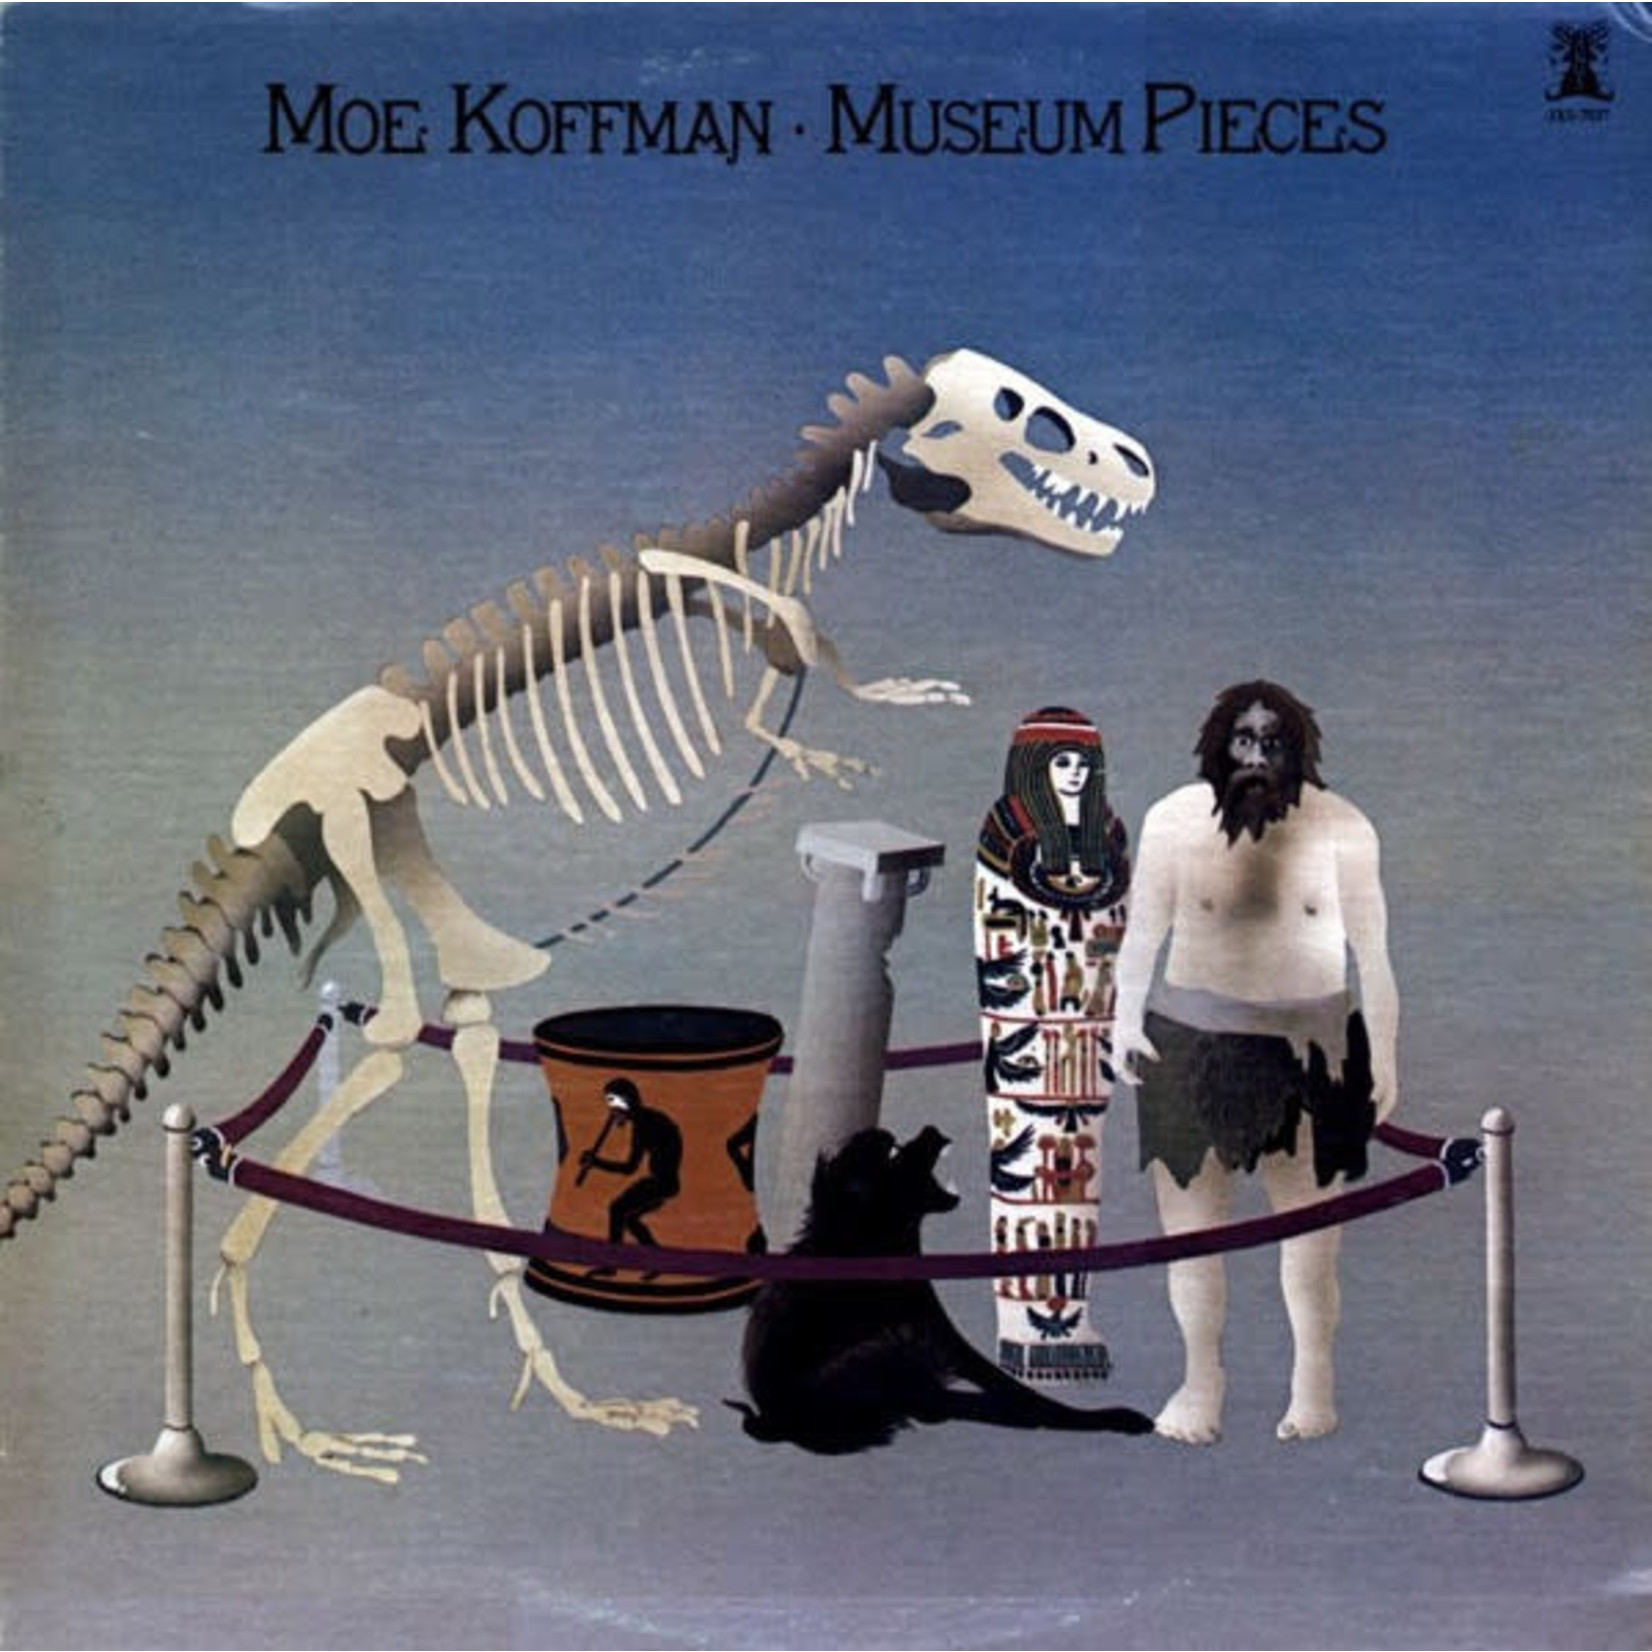 [Vintage] Moe Koffman - Museum Pieces